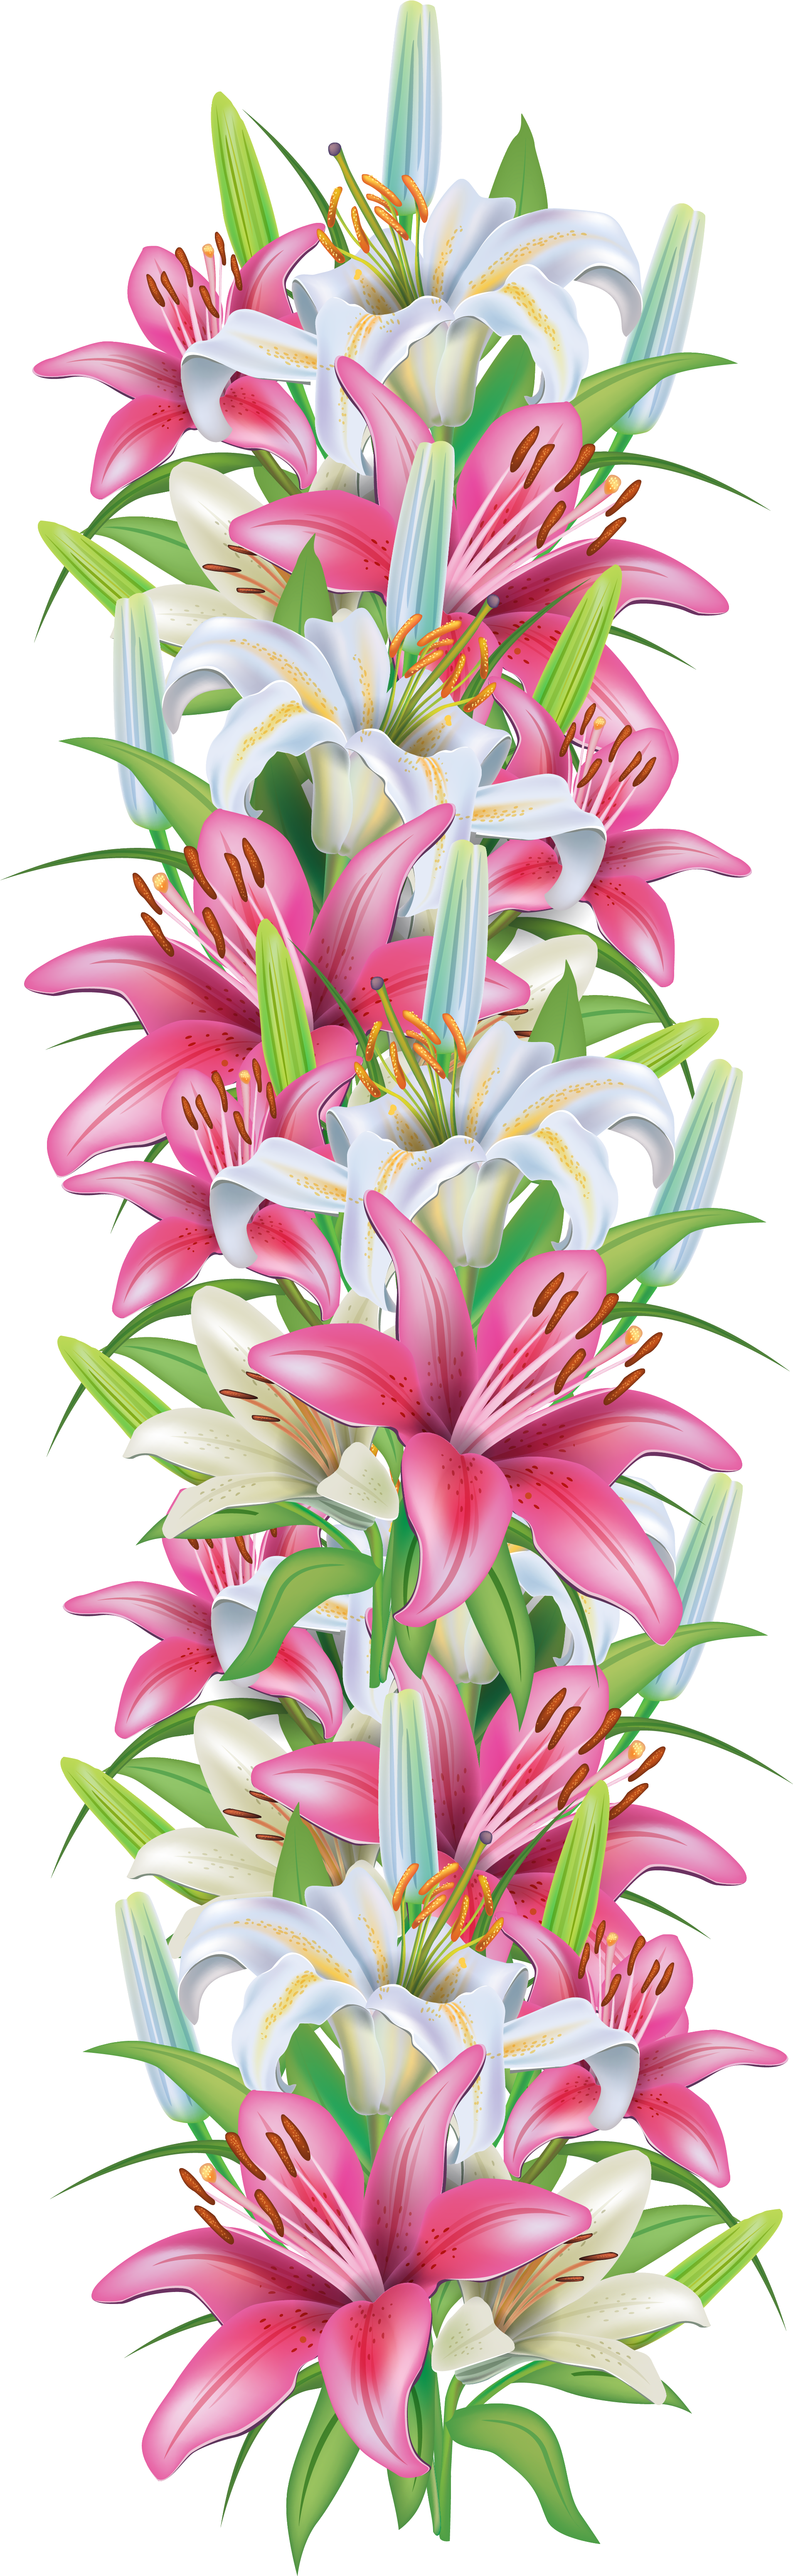 Lily clipart flower decoration, Lily flower decoration Transparent FREE